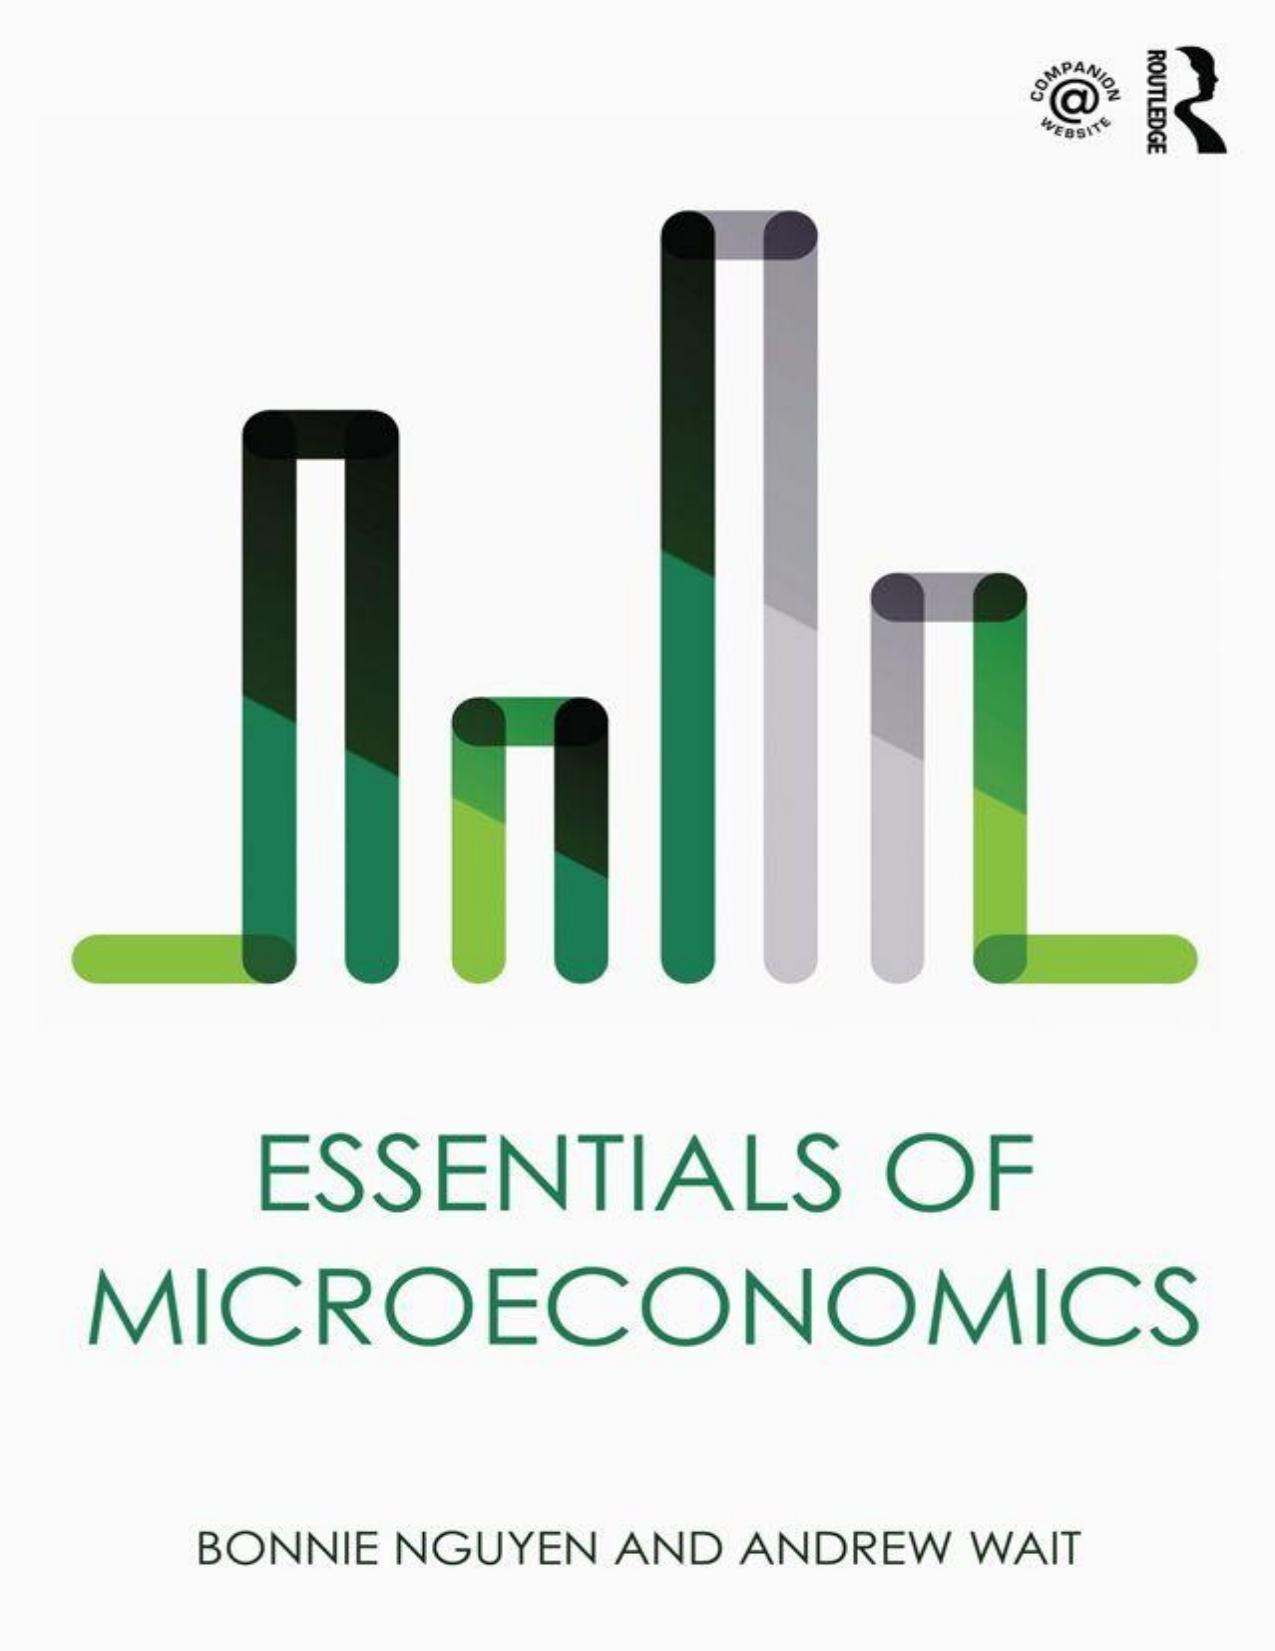 Essentials of Microeconomics by Bonnie Nguyen & Andrew Wait - Bonnie Nguyen & Andrew Wait.jpg